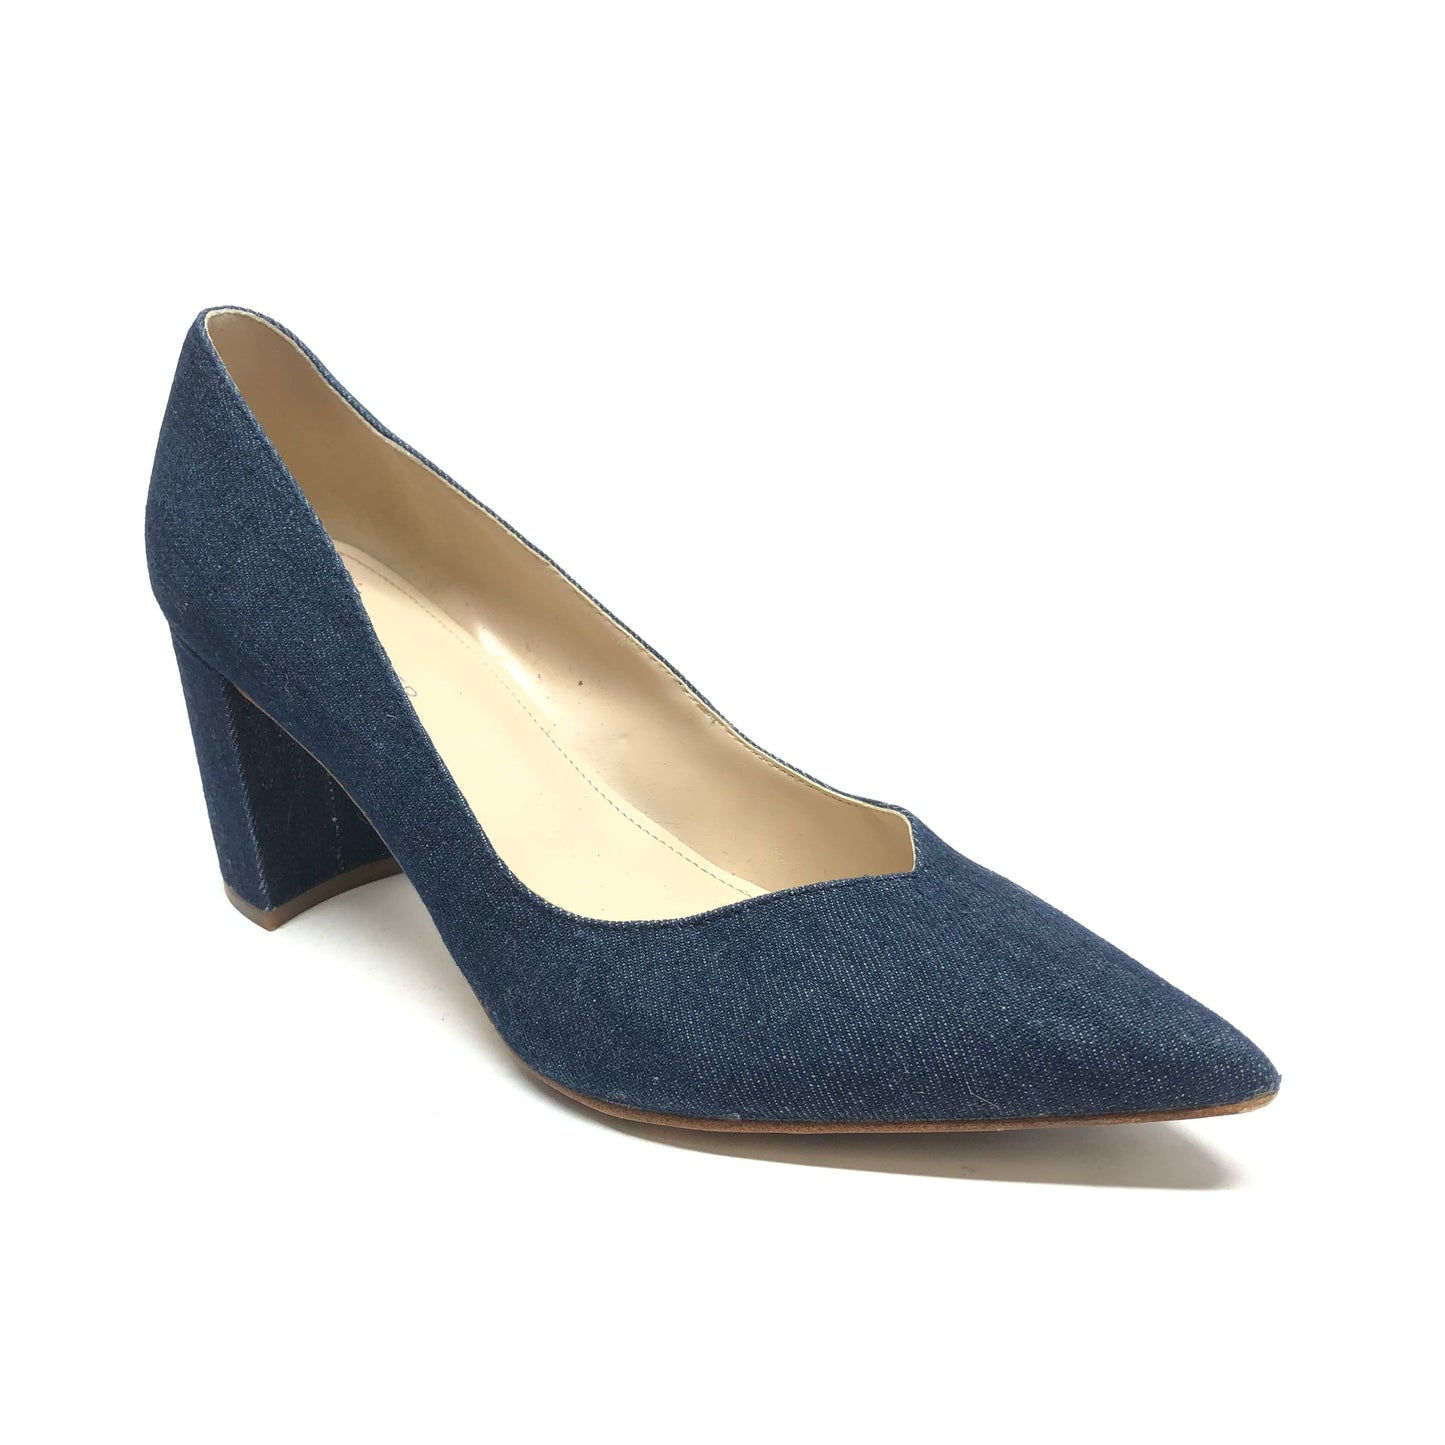 Blue Denim Shoes Heels Block Marc Fisher, Size 8.5